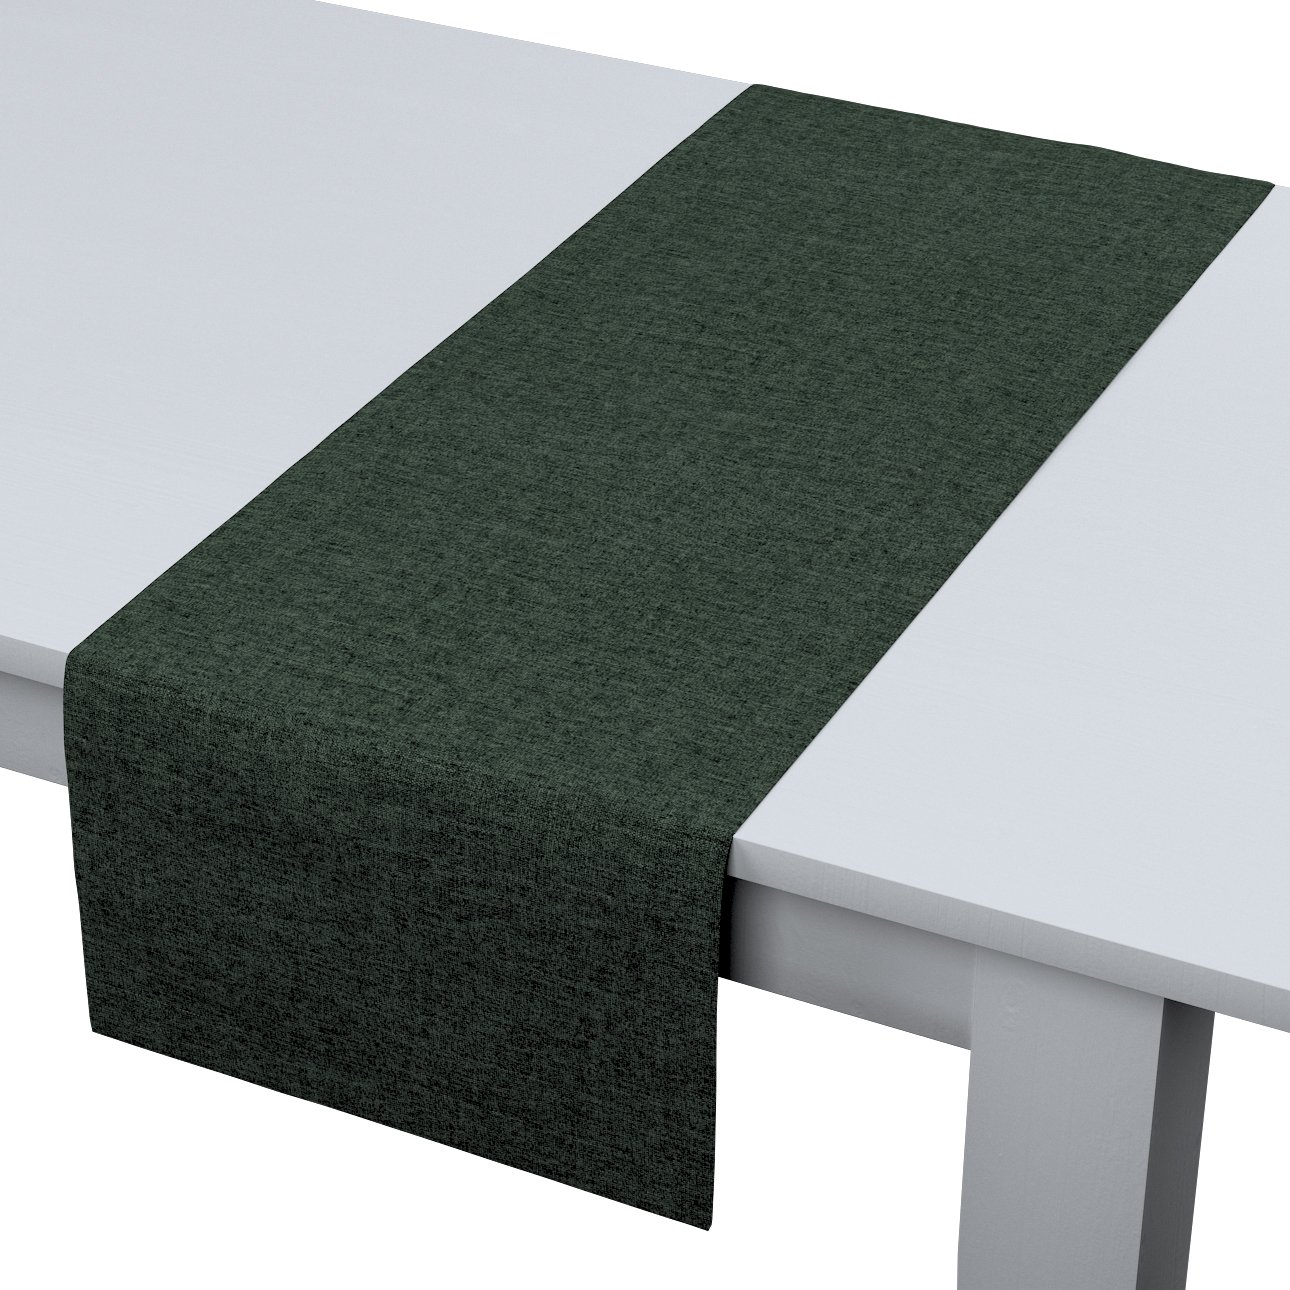 Dekoria Štóla na stôl, lesná zelená, 40 x 130 cm, City, 704-81